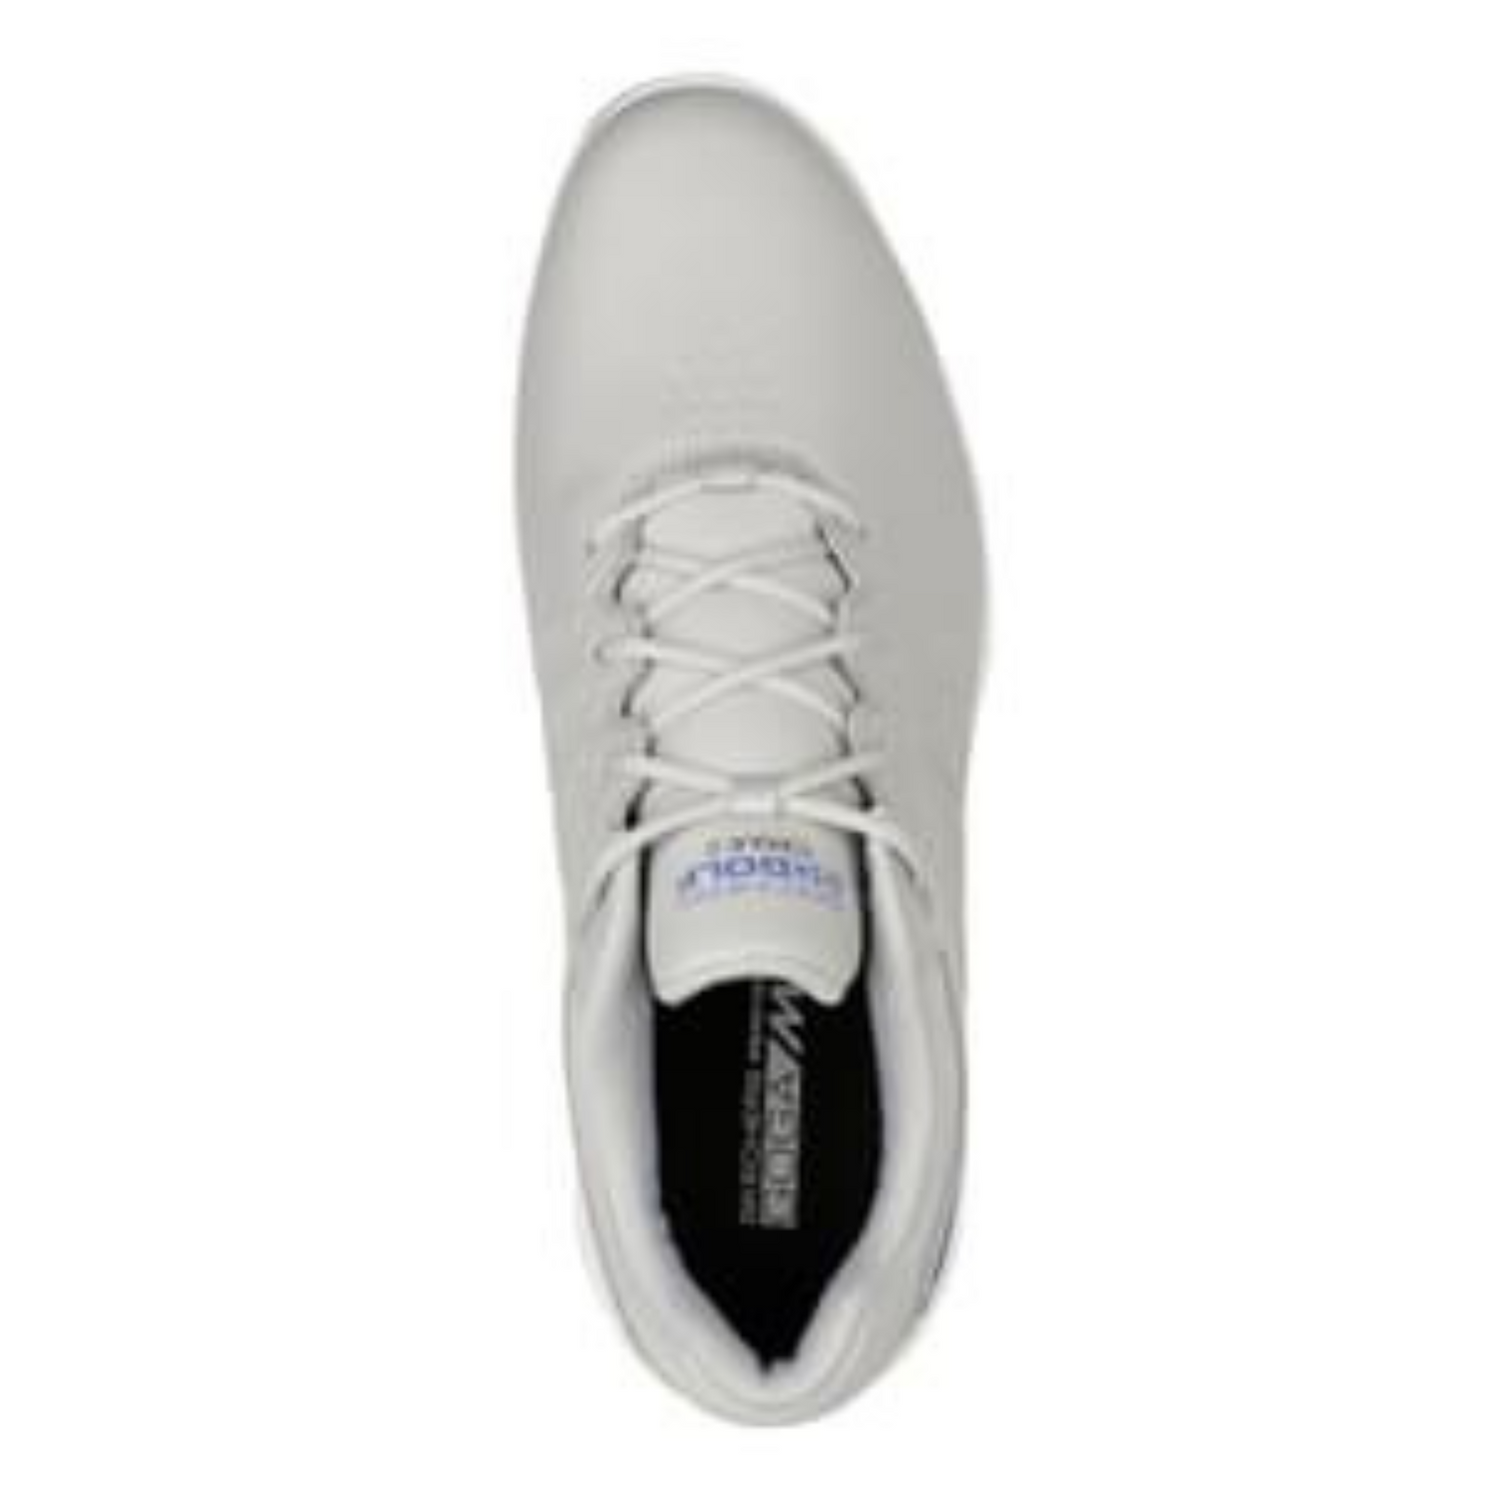 Skechers Go Golf Torque 2 Spiked Golf Shoes 214027 - Grey   